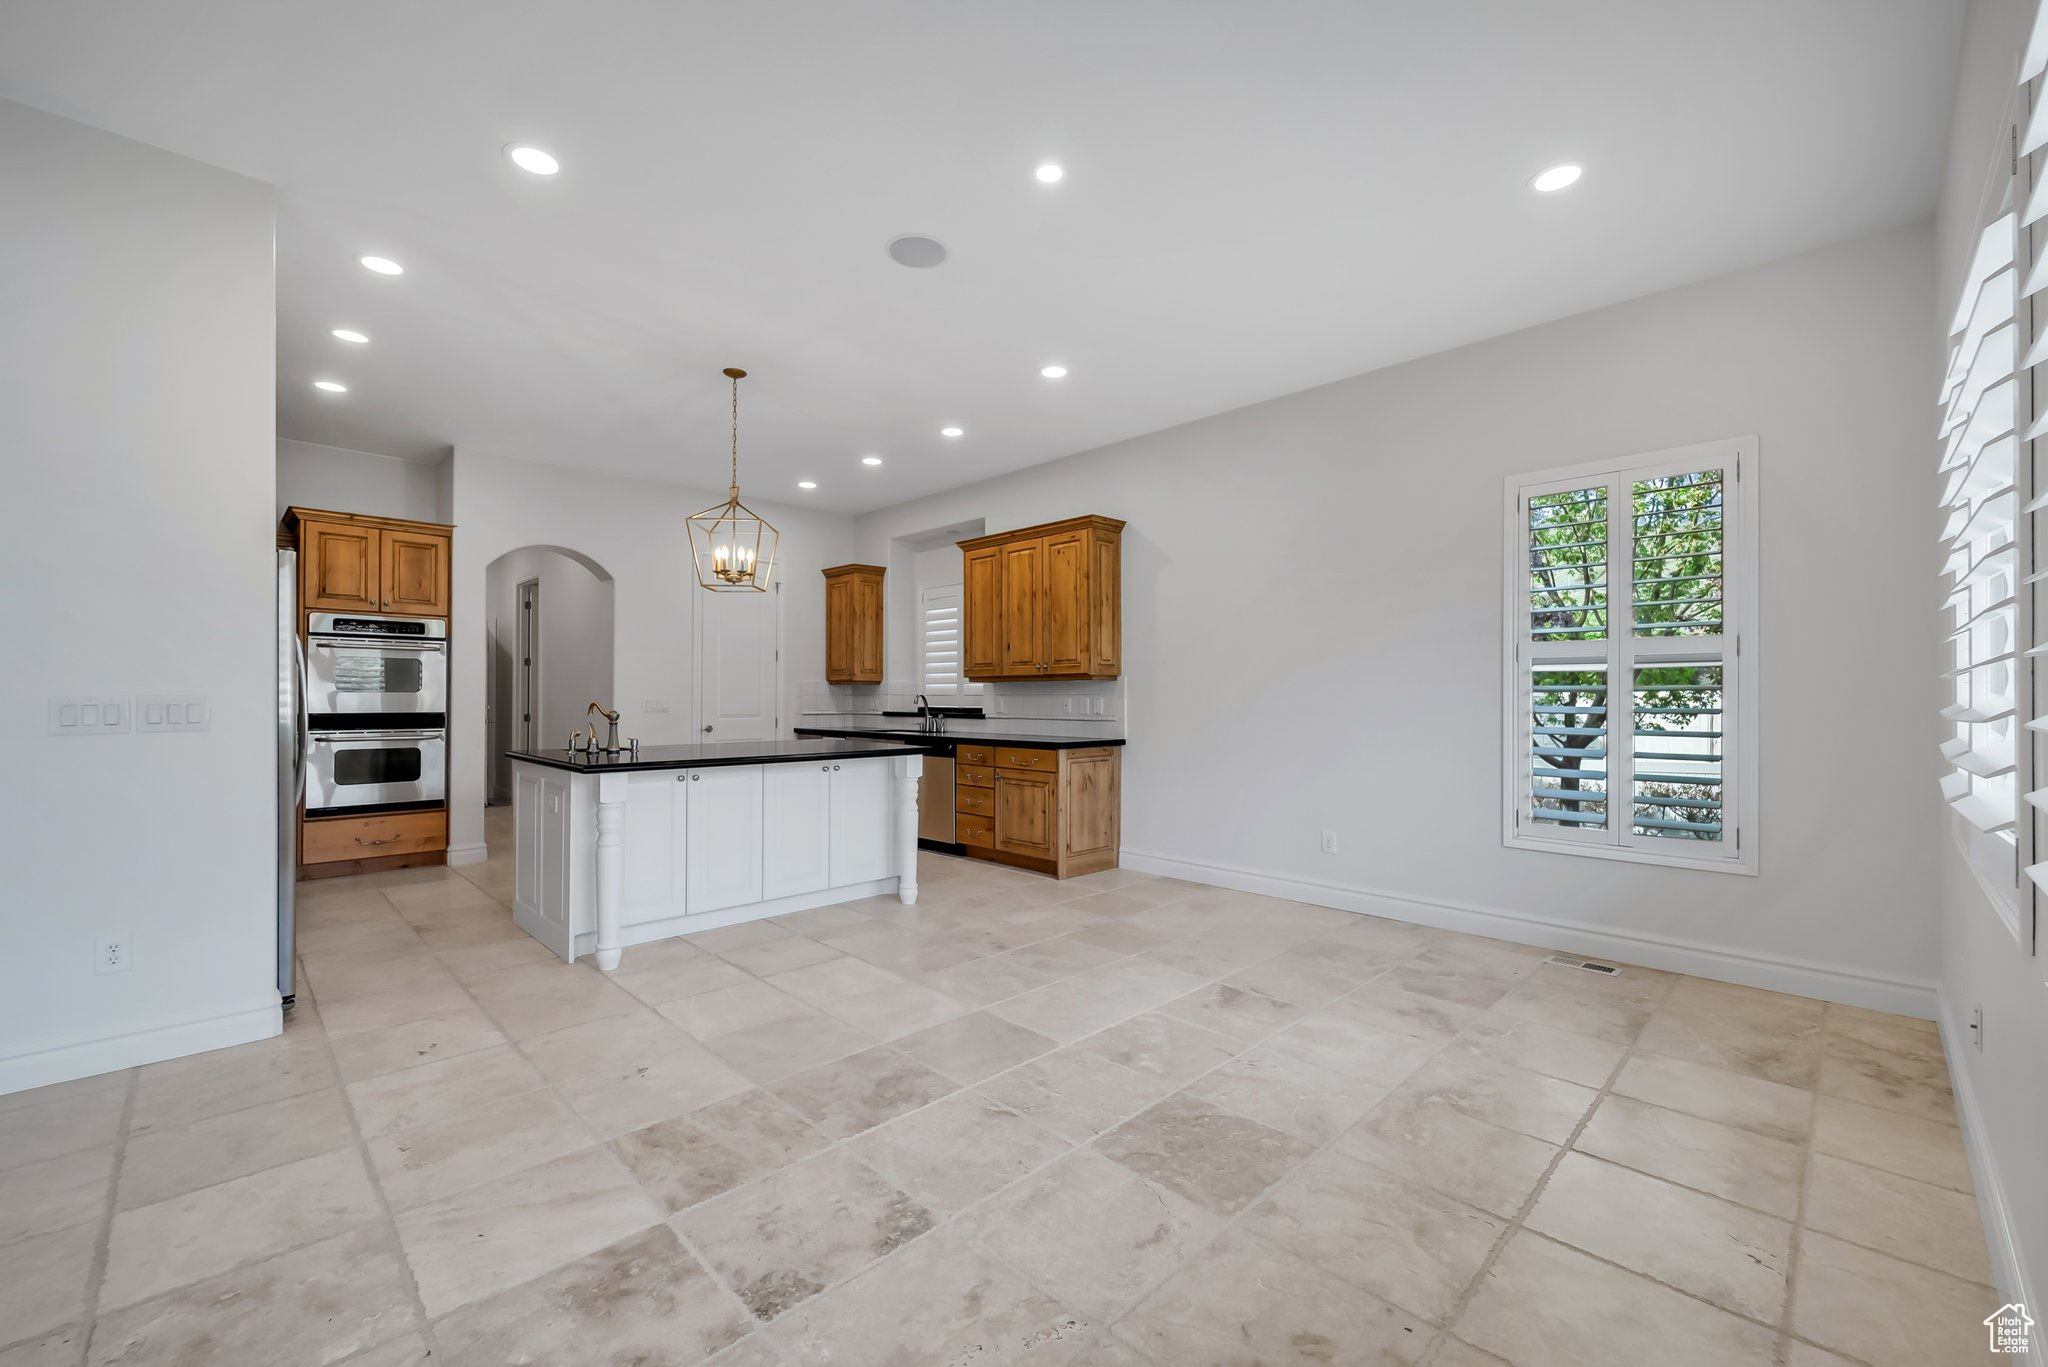 Kitchen featuring light tile floors, a kitchen island, tasteful backsplash, decorative light fixtures, and stainless steel double oven